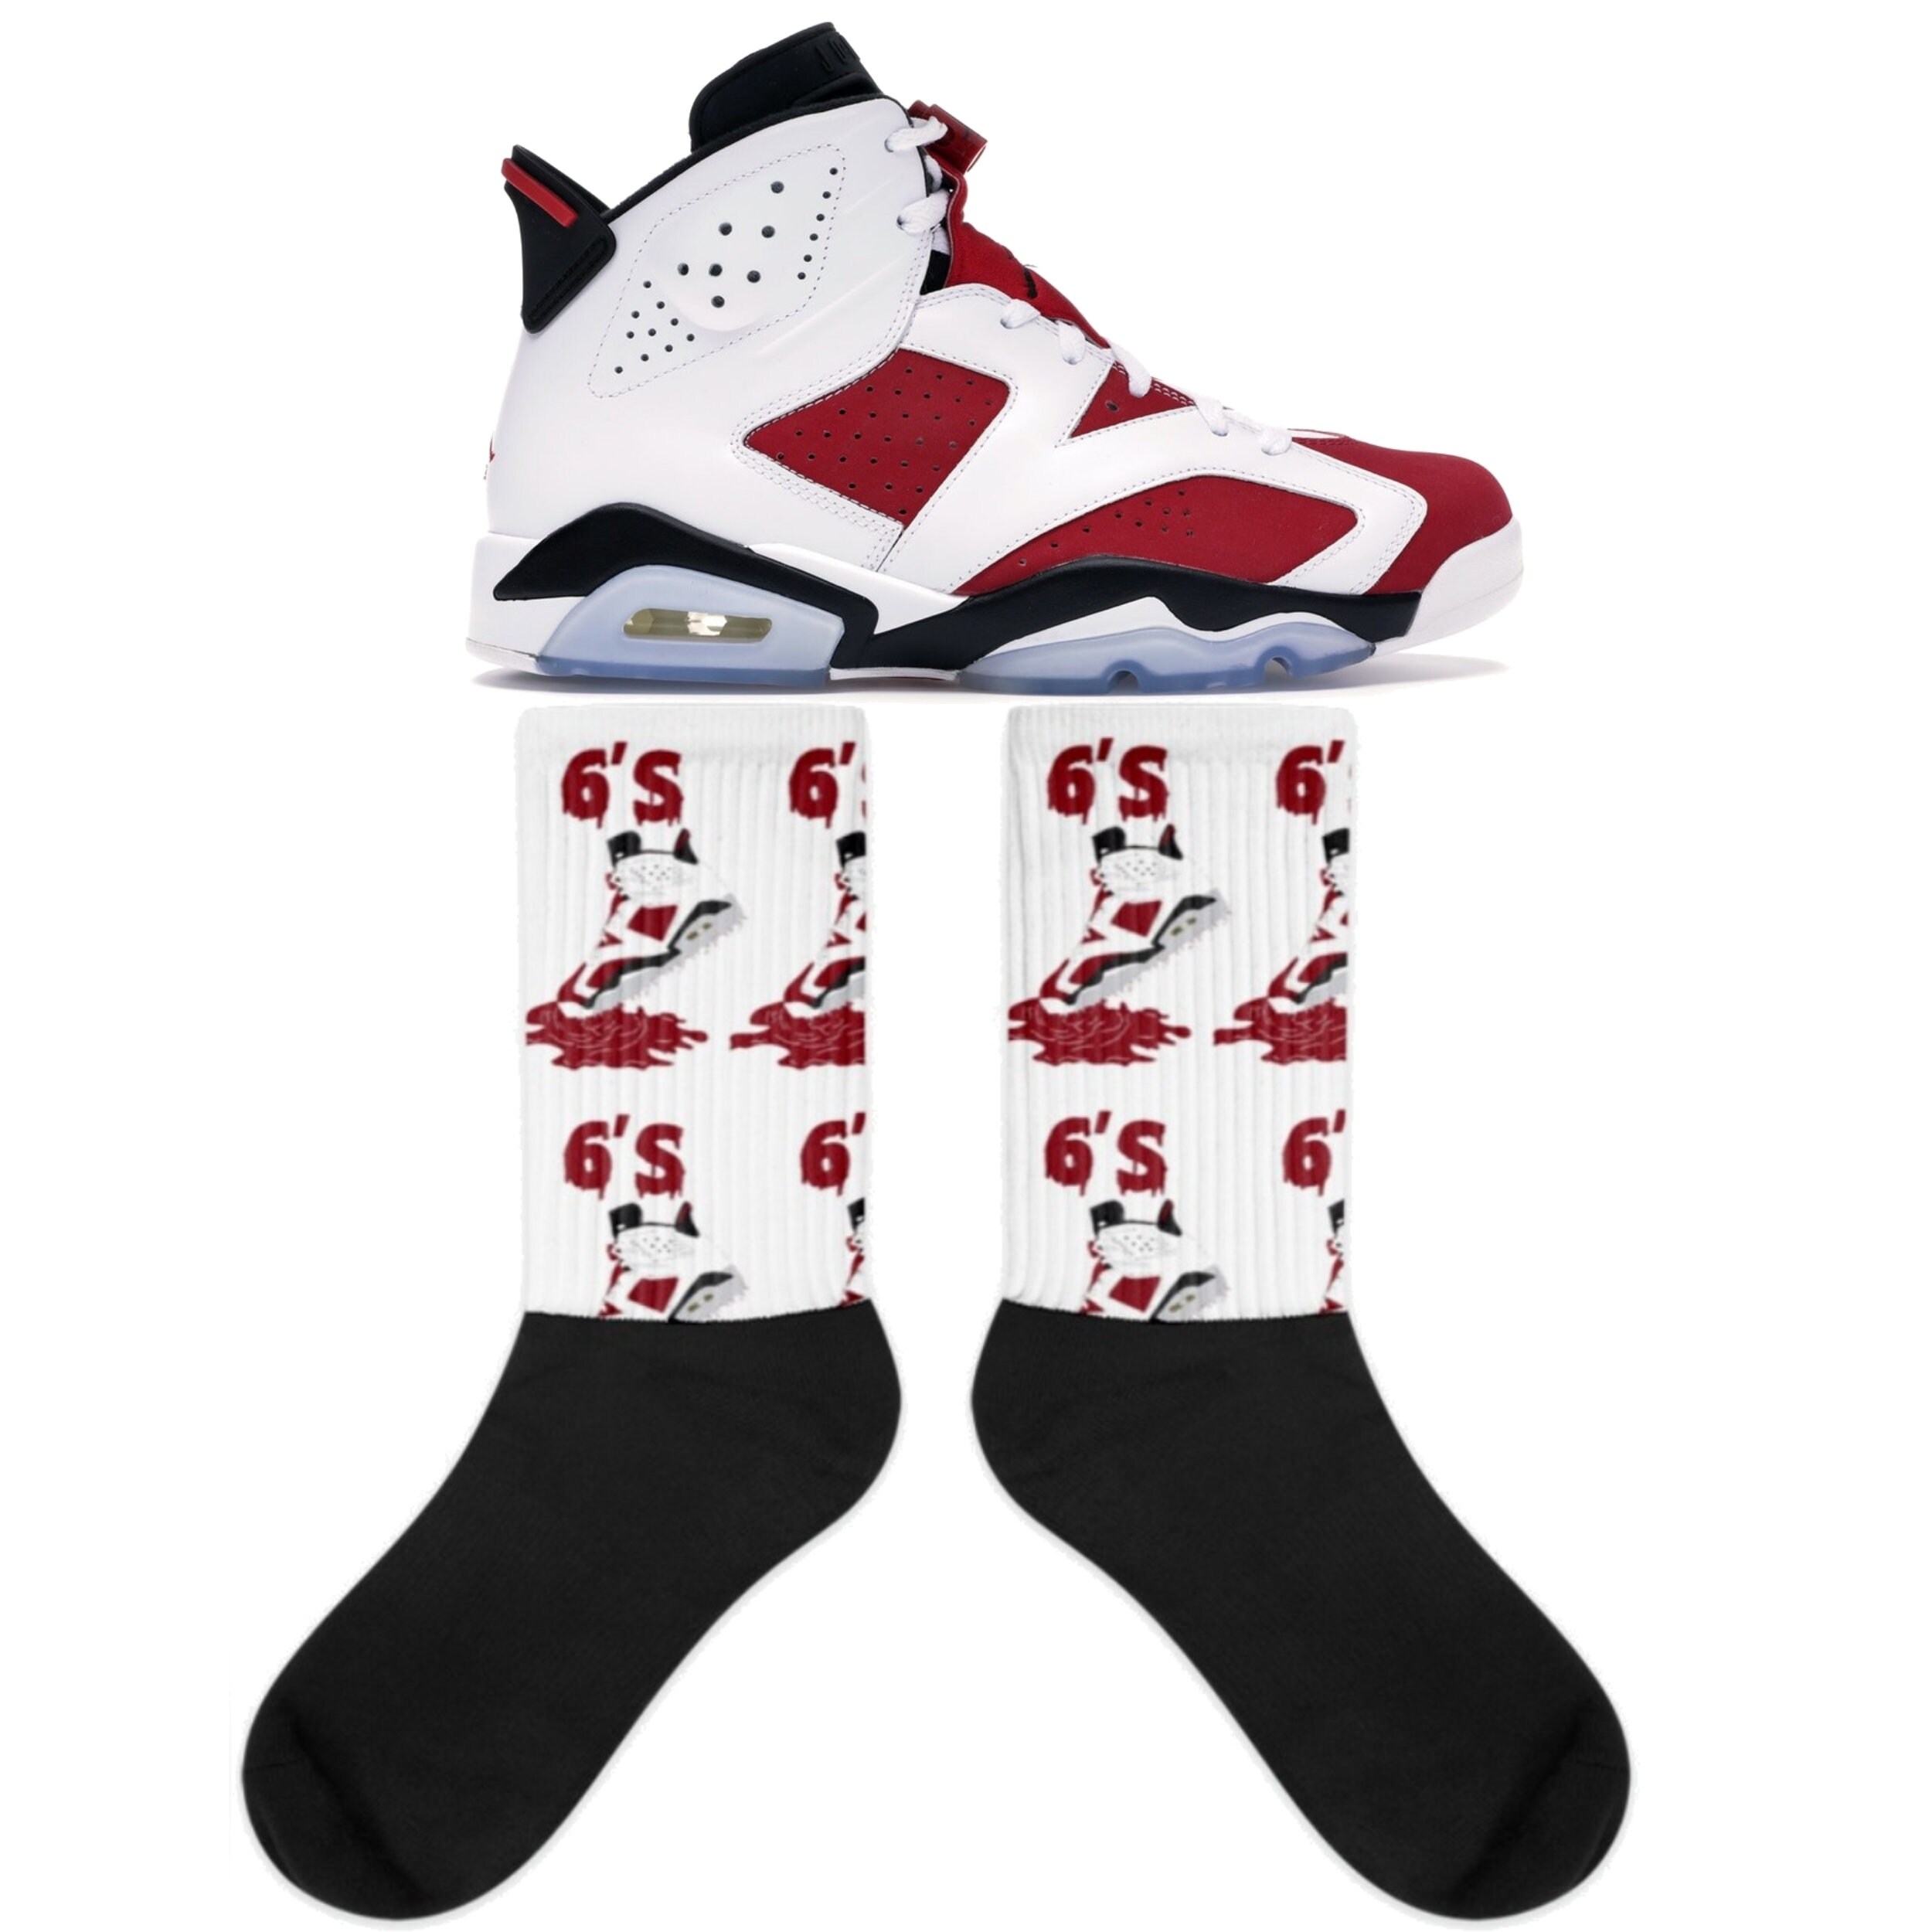 Carmine Jordan 6 Matching Socks Fits 